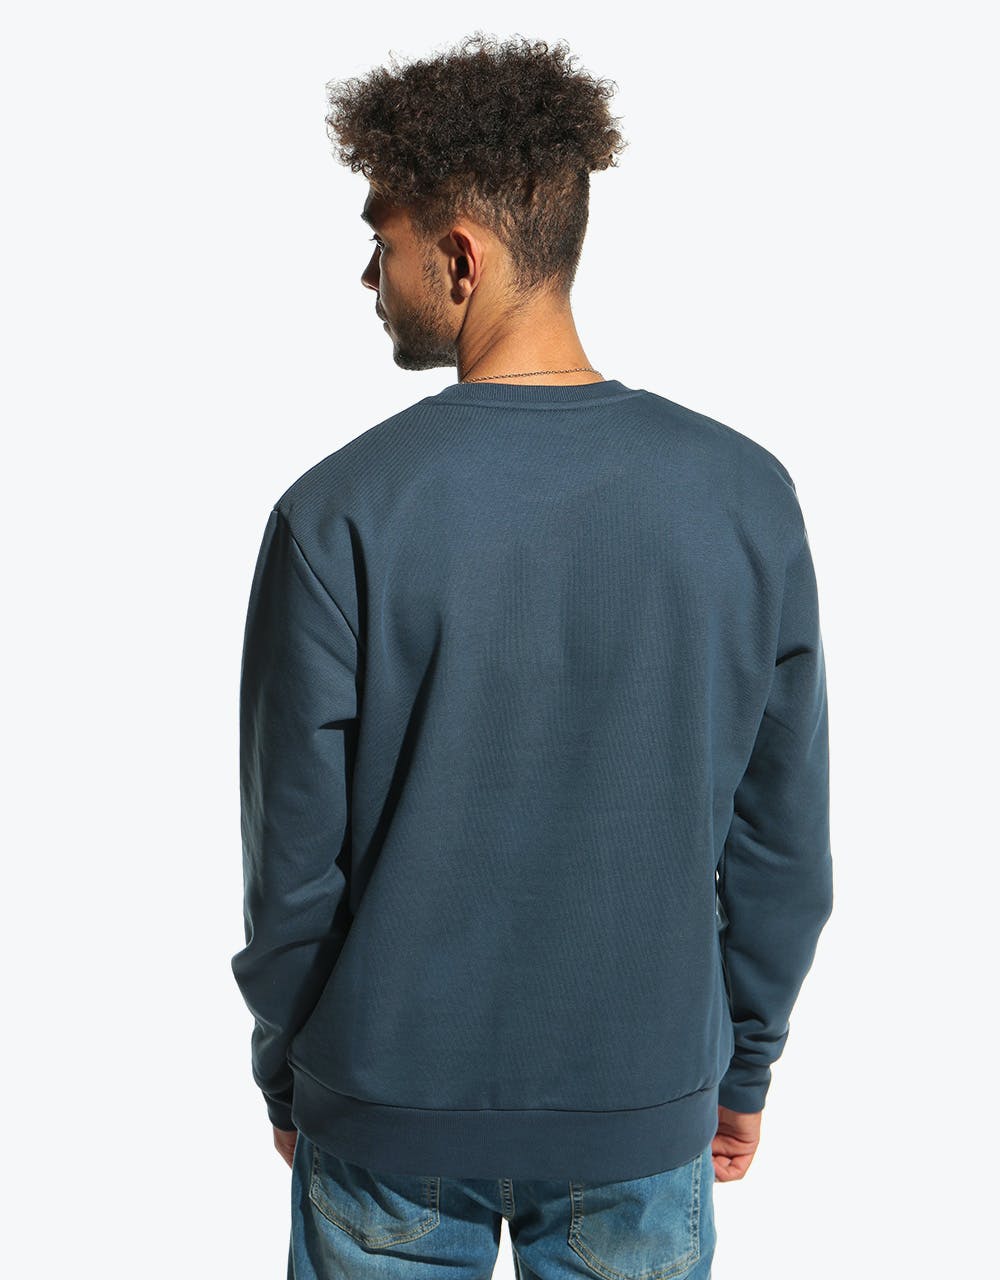 Carhartt WIP Script Embroidery Sweatshirt - Admiral/Black